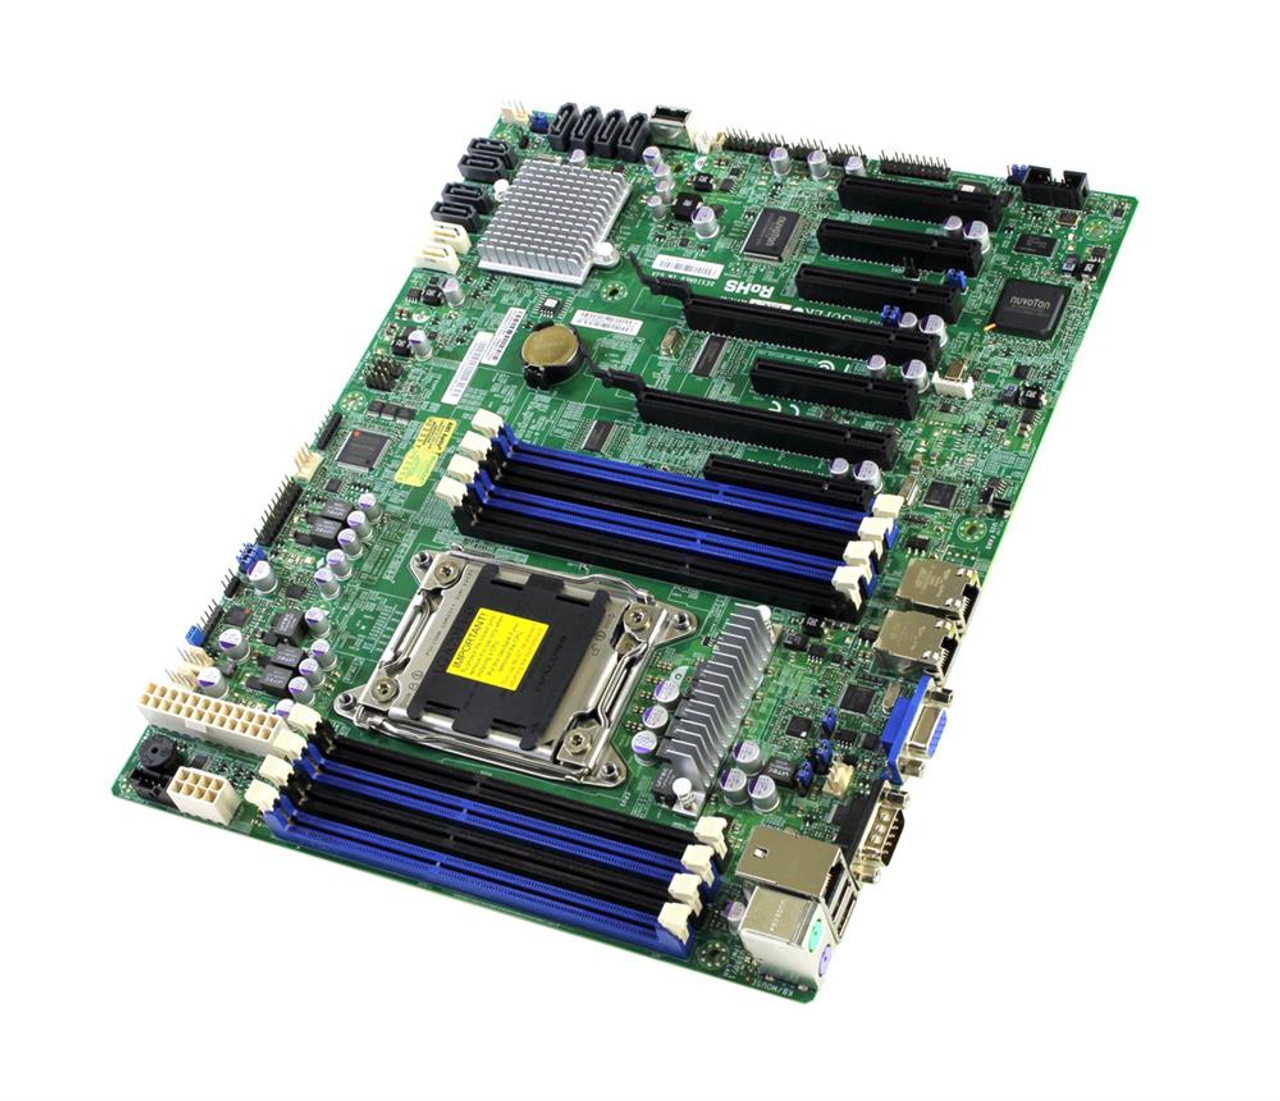 MBX9SRLB SuperMicro X9srl-b LGA2011 Intel C602 DDR3 SATA3 V2GBe Atx Server Motherboard (Refurbished)